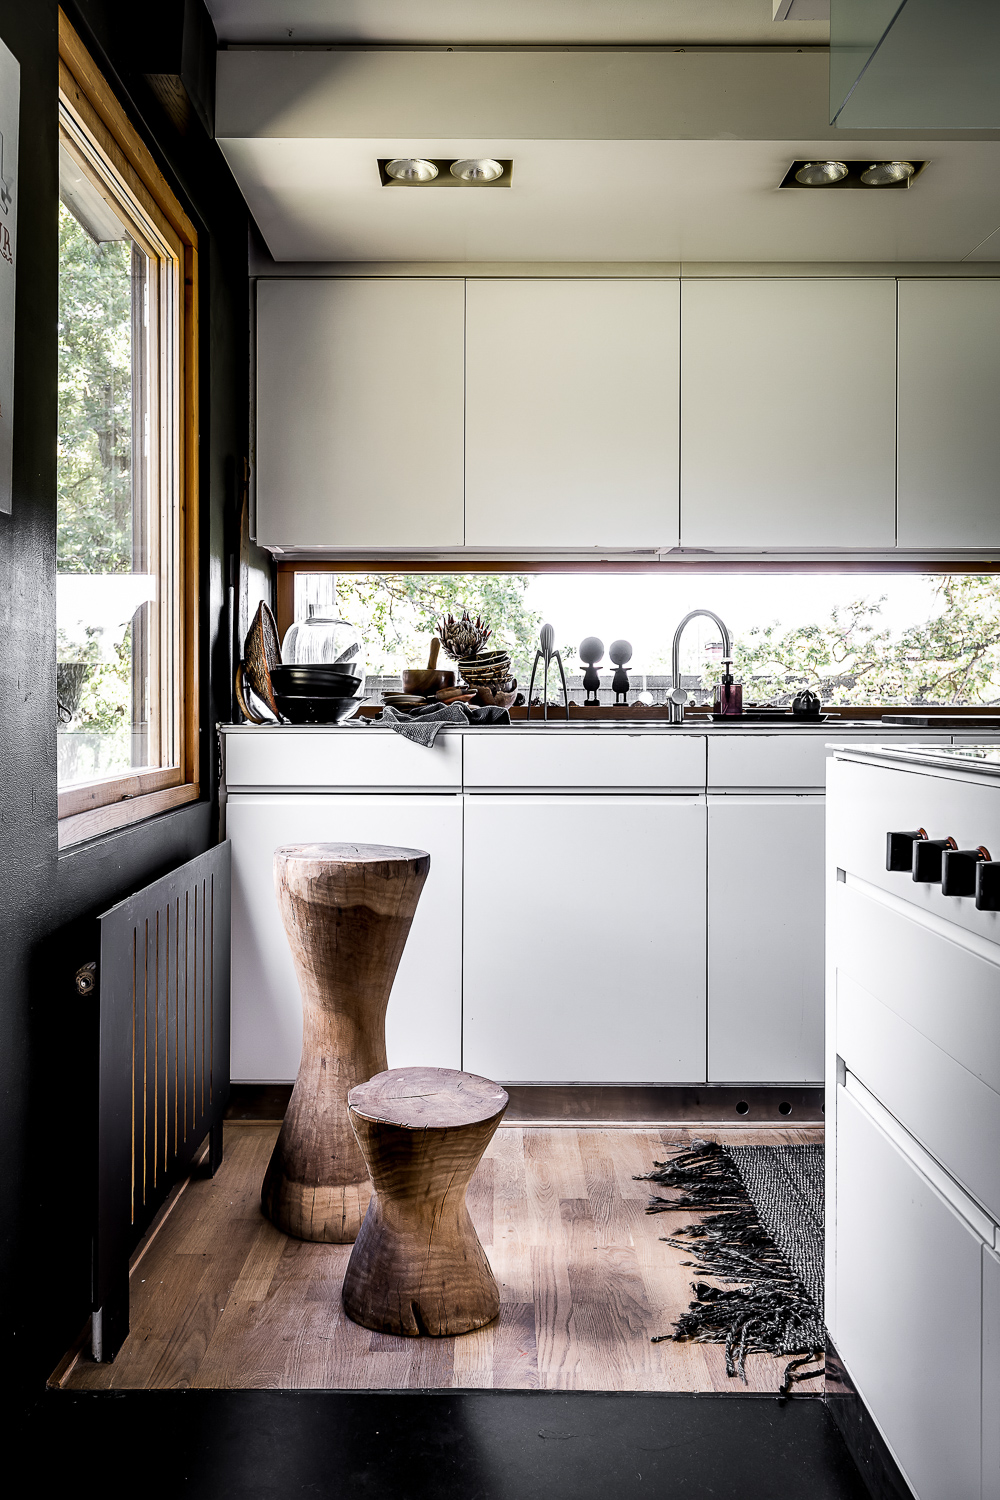 Kitchen in minimalist villa in white and gray with a simple decor